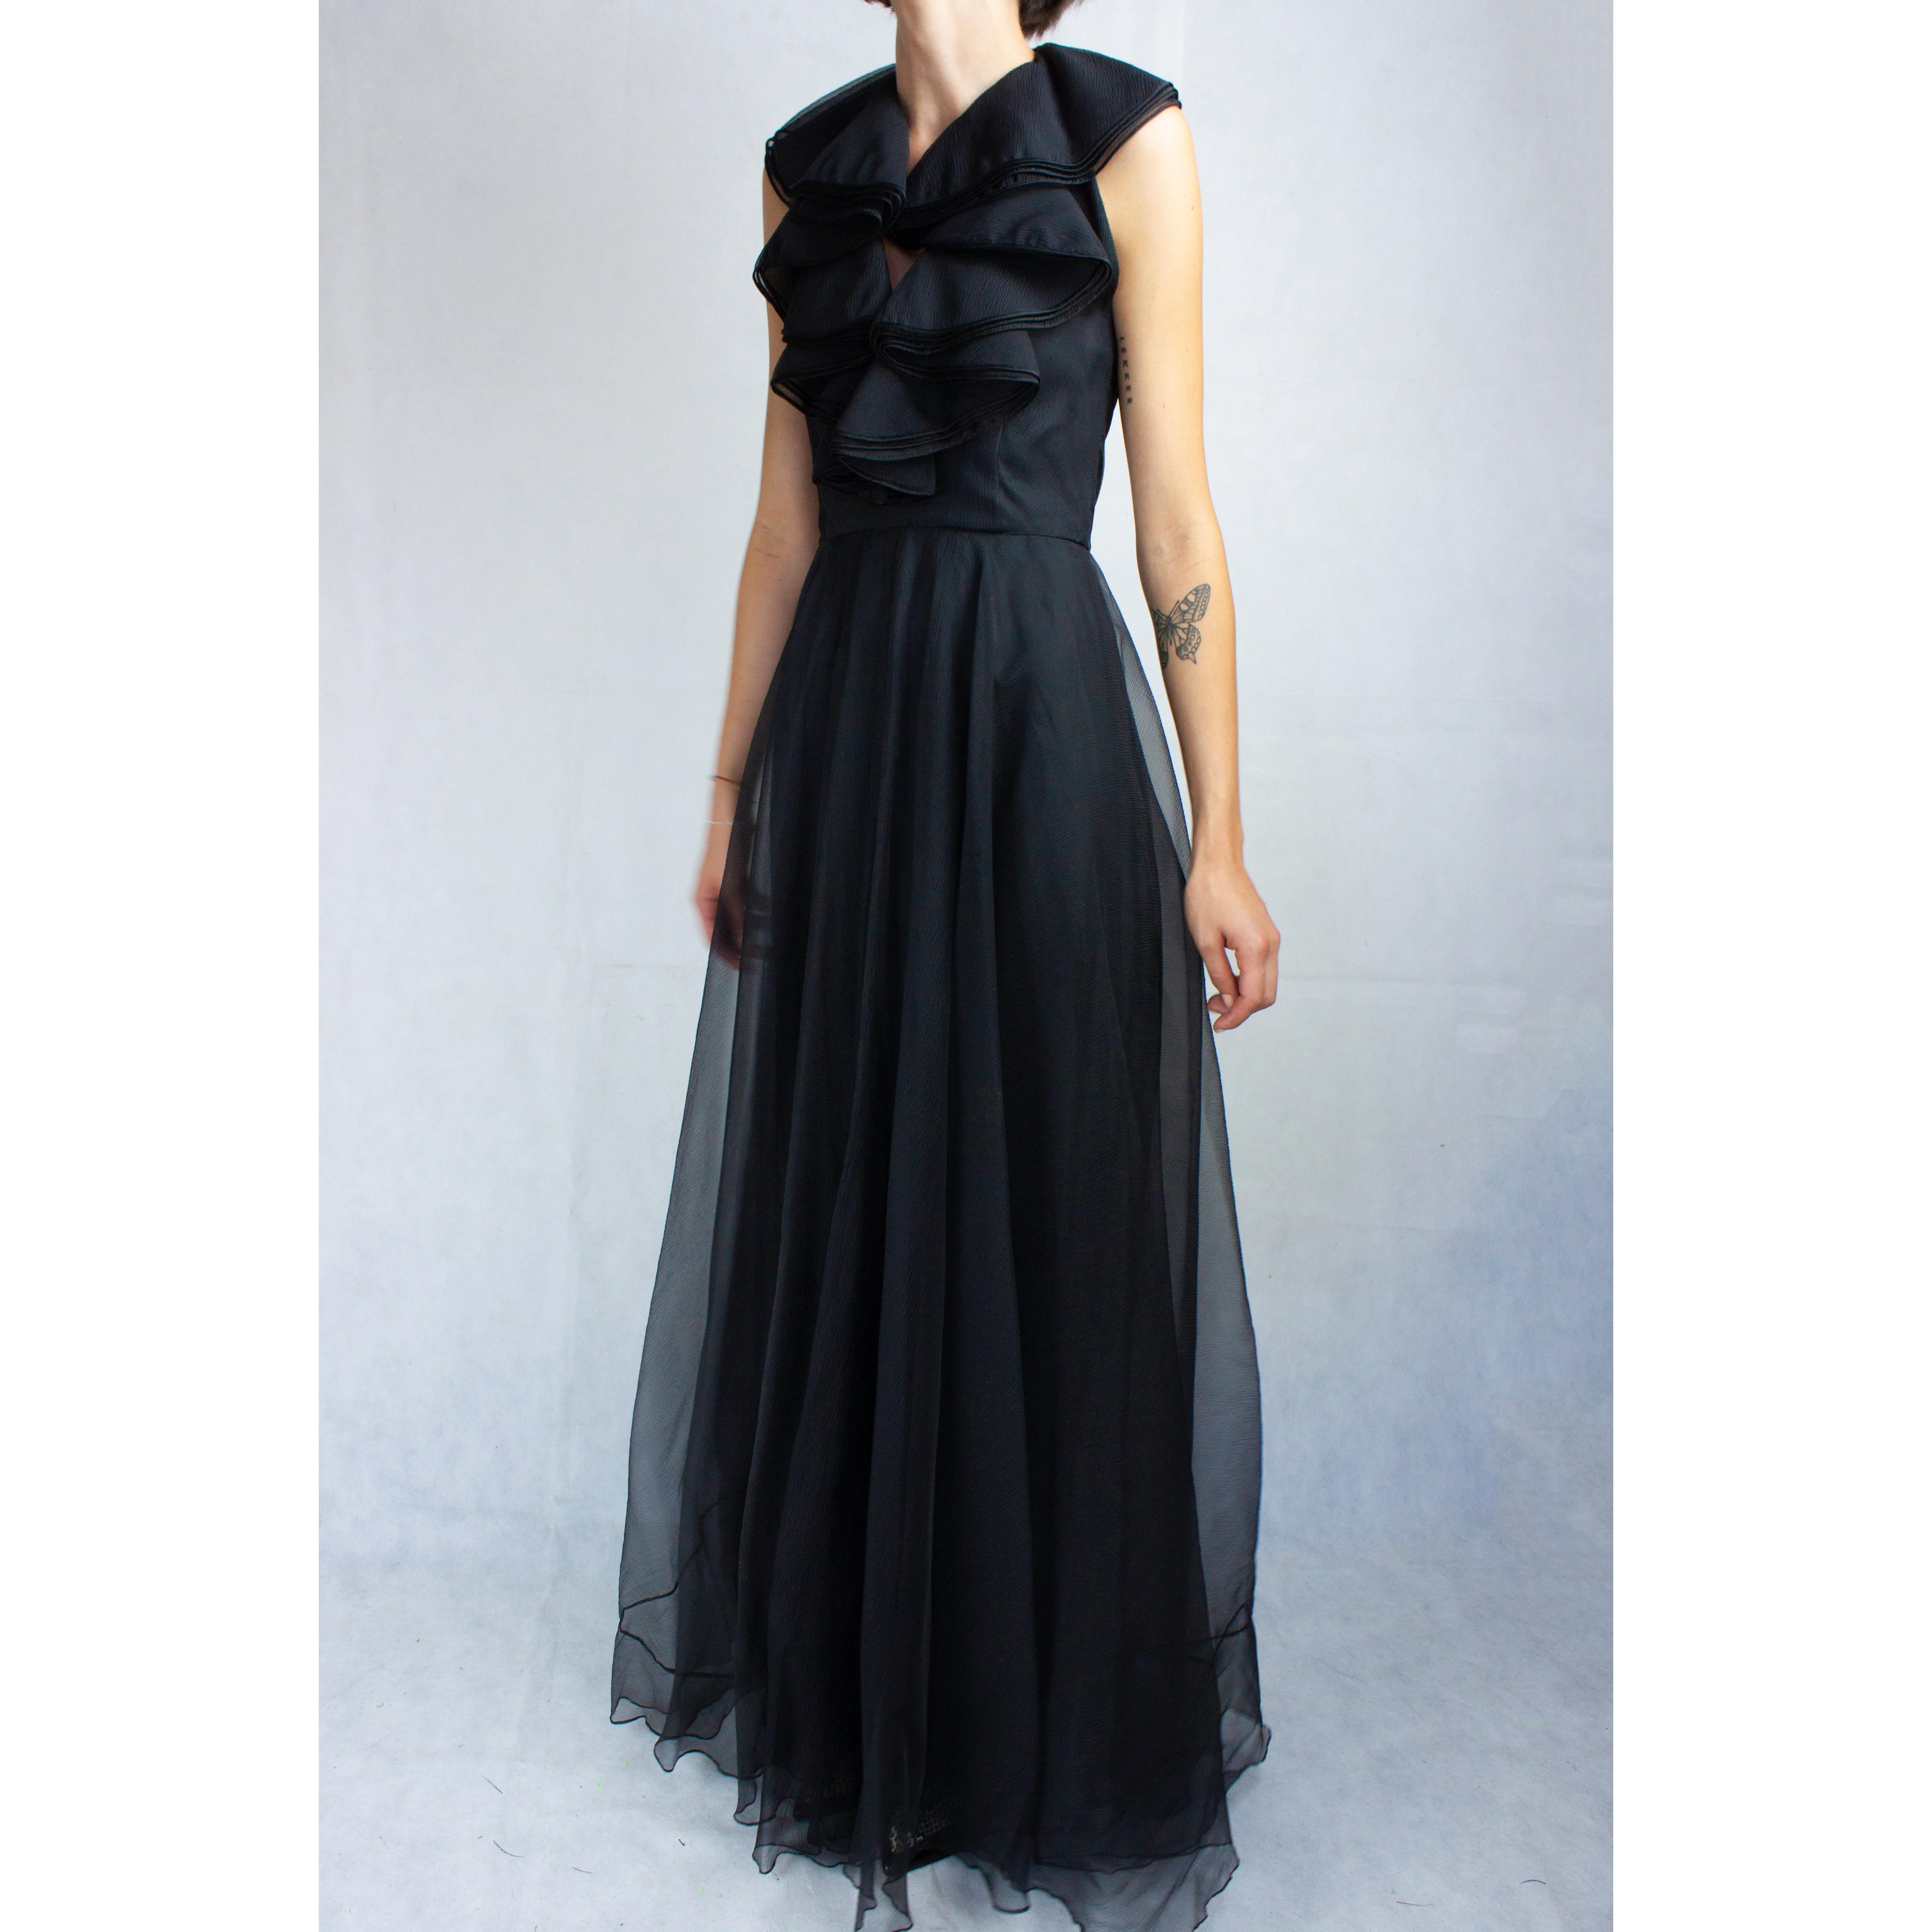 christian dior black gown